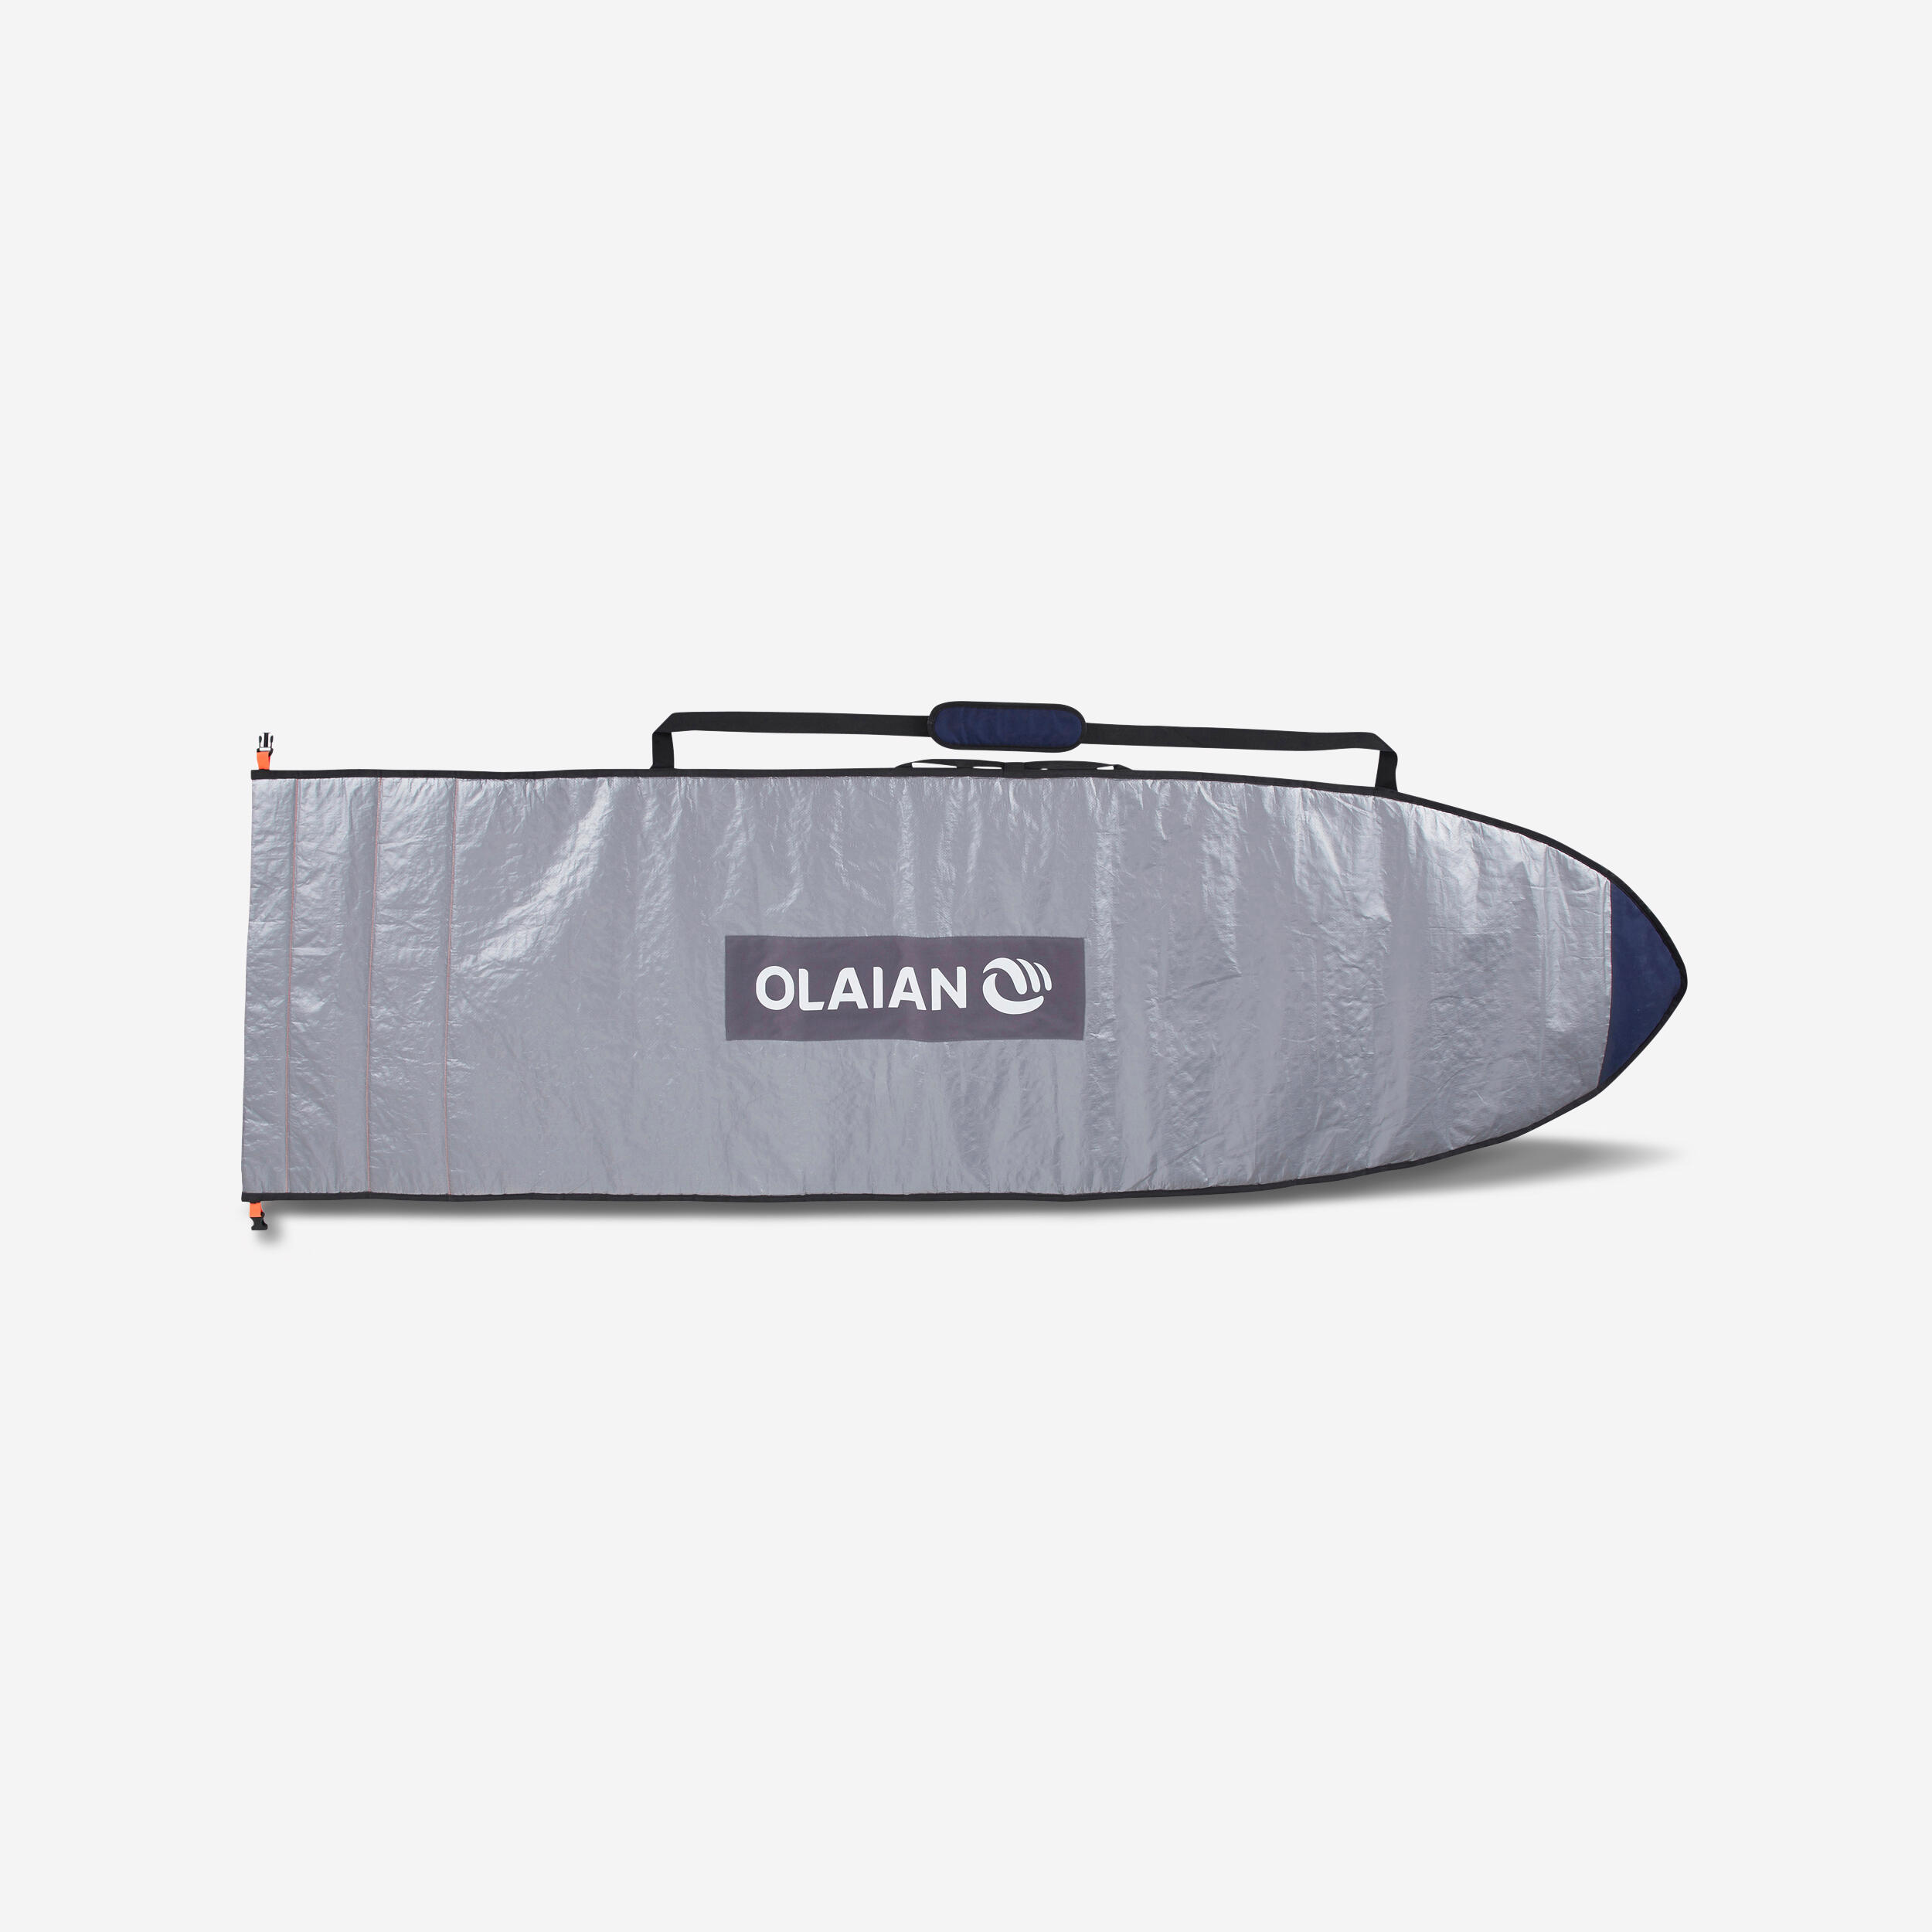 OLAIAN Boardbag Surfboard verstellbar 5'4